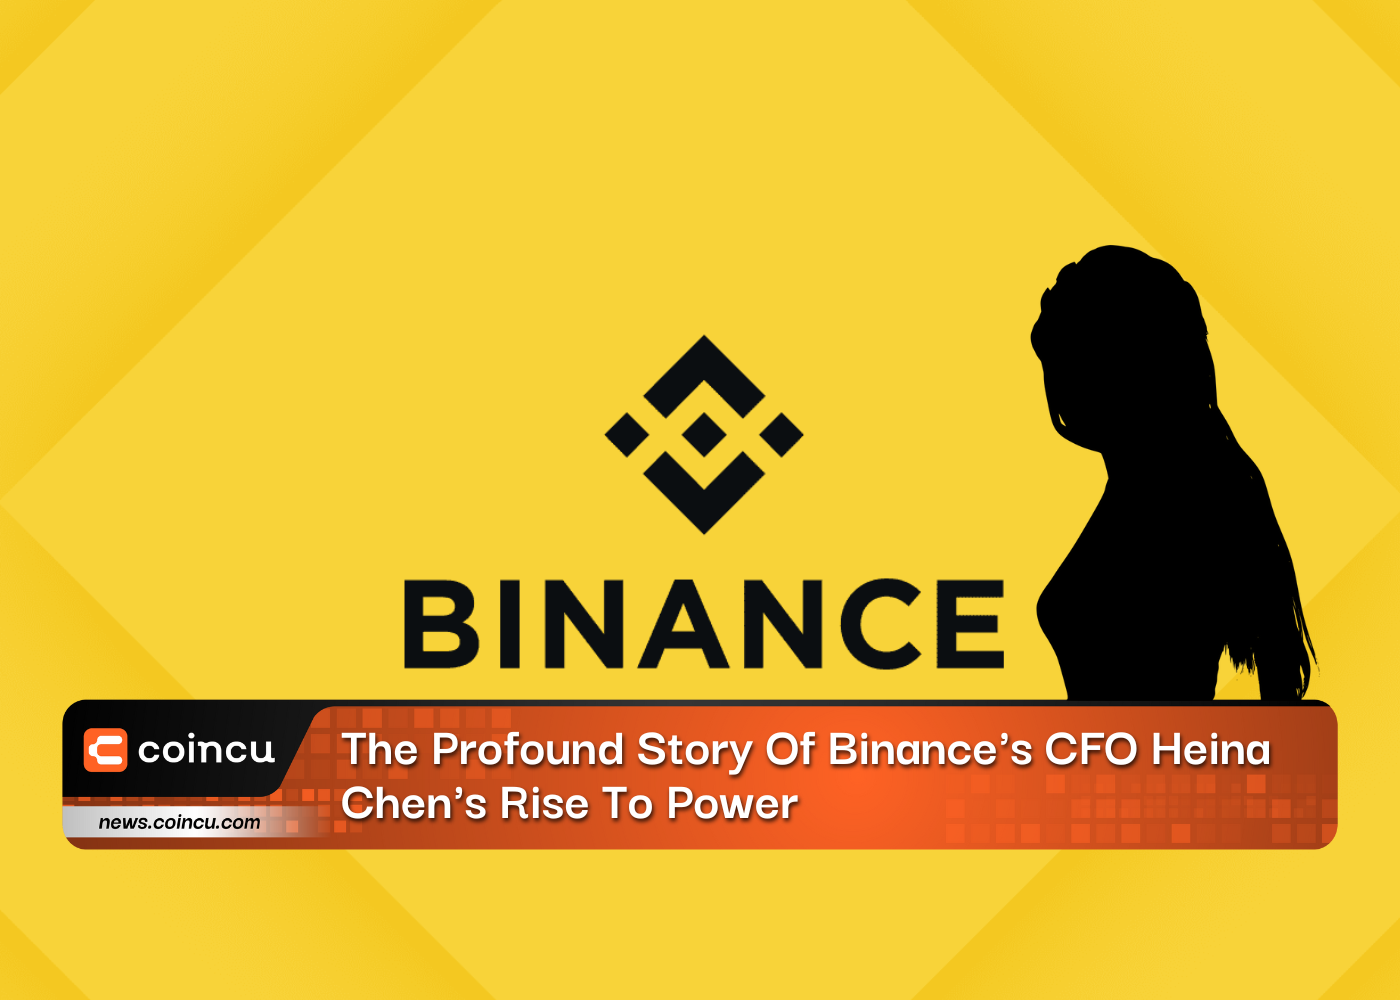 Binance's CFO Heina Chen's Rise To Power, The Profound Story